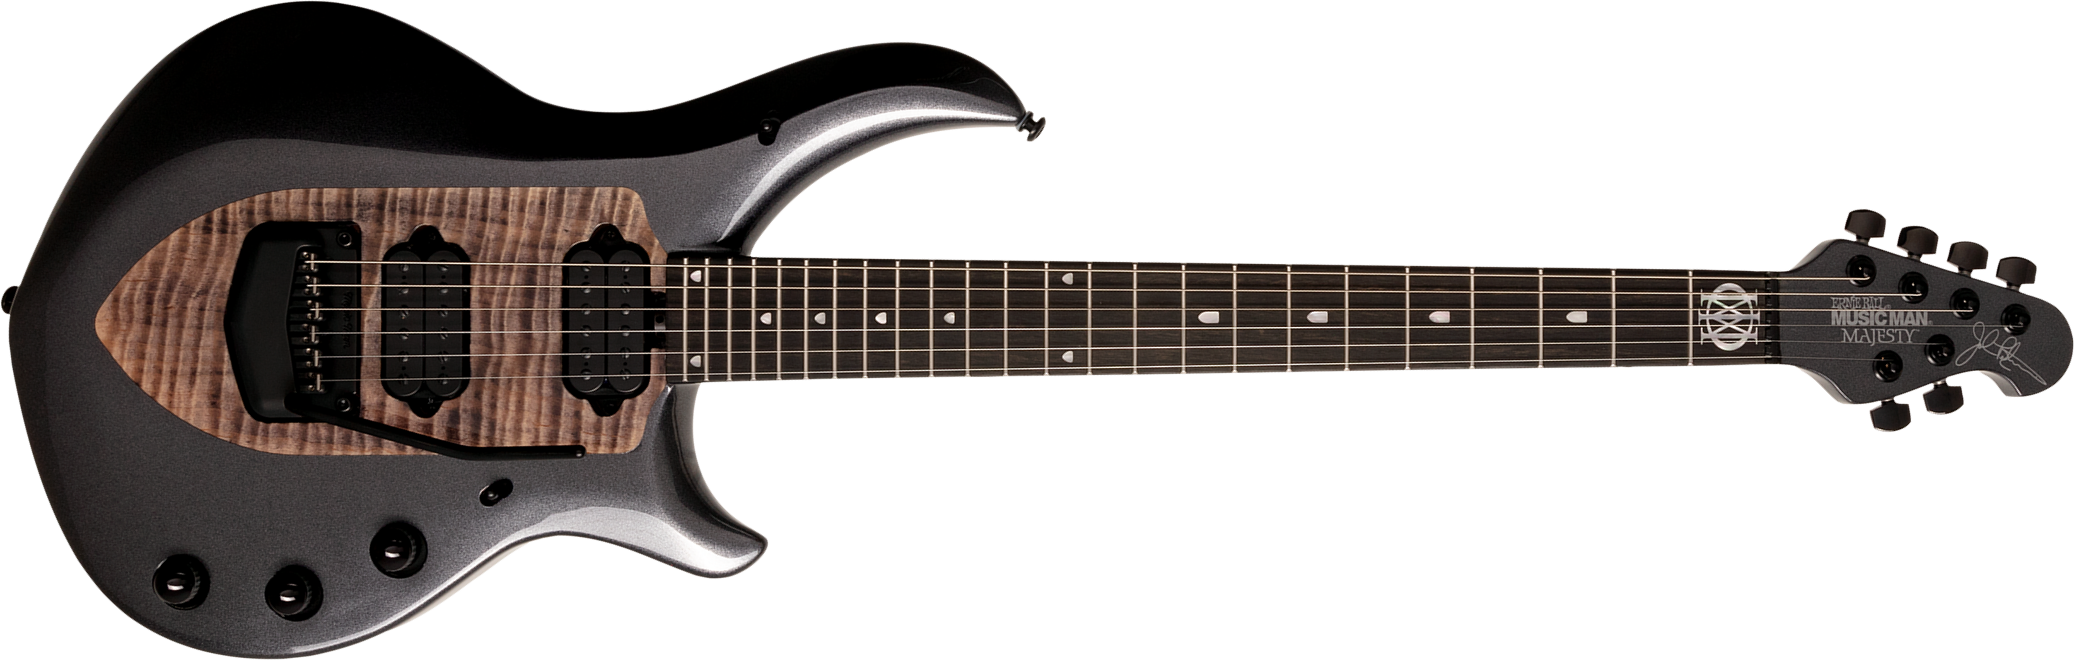 Music Man John Petrucci Majesty 6 Signature 2h Dimarzio Piezo Trem - Smoked Pearl - Metal electric guitar - Main picture